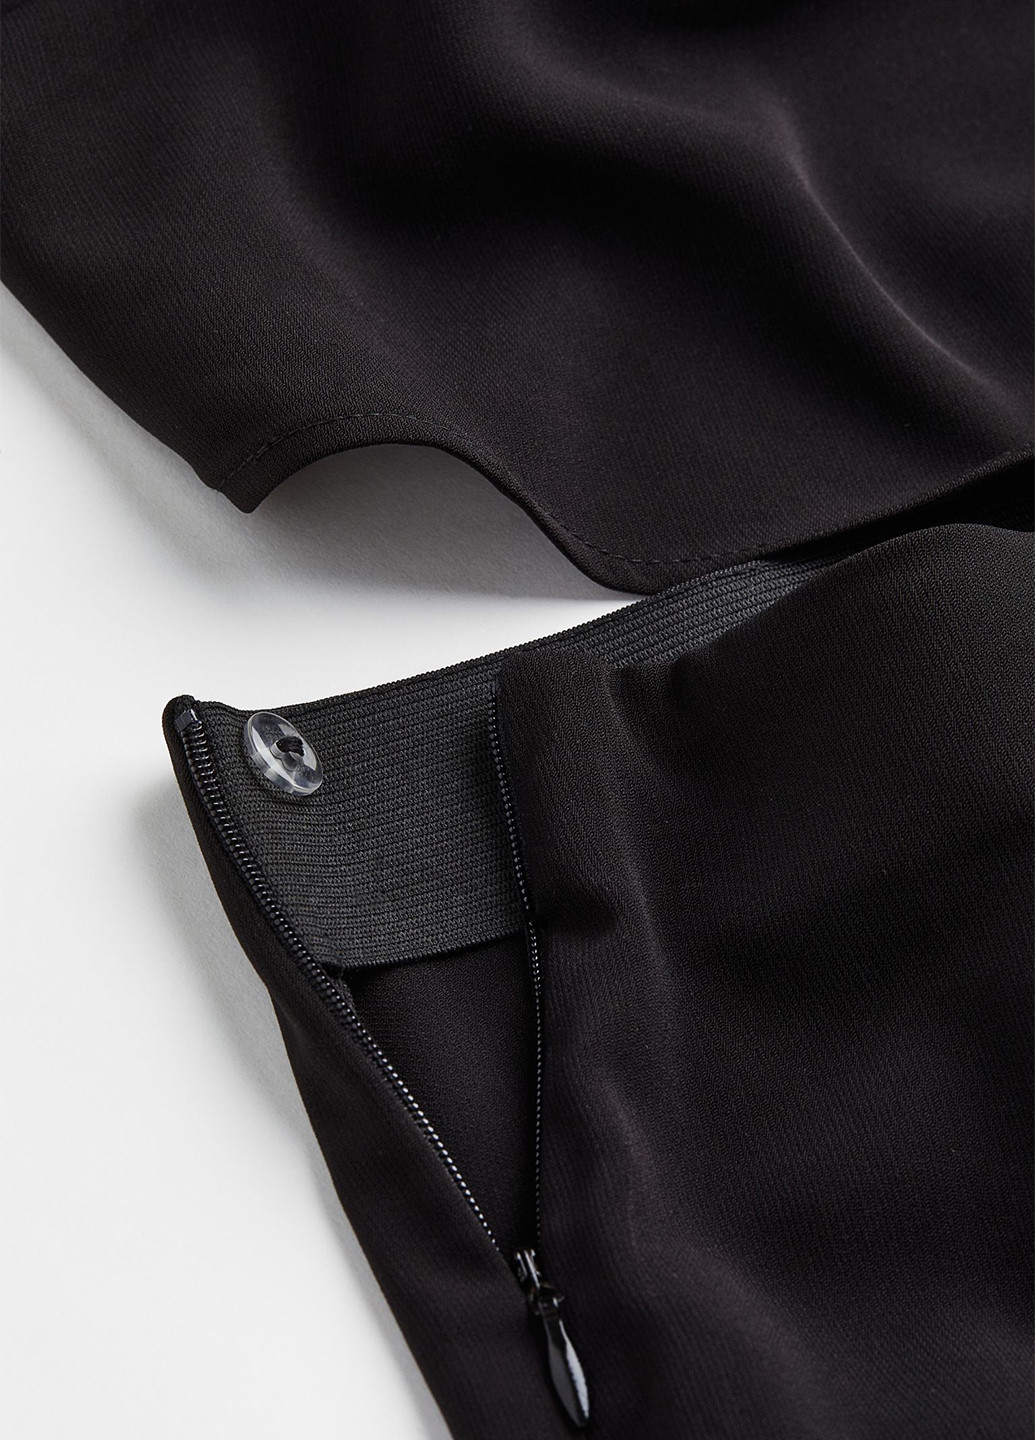 Комбинезон H&M комбинезон-брюки однотонный чёрный кэжуал вискоза